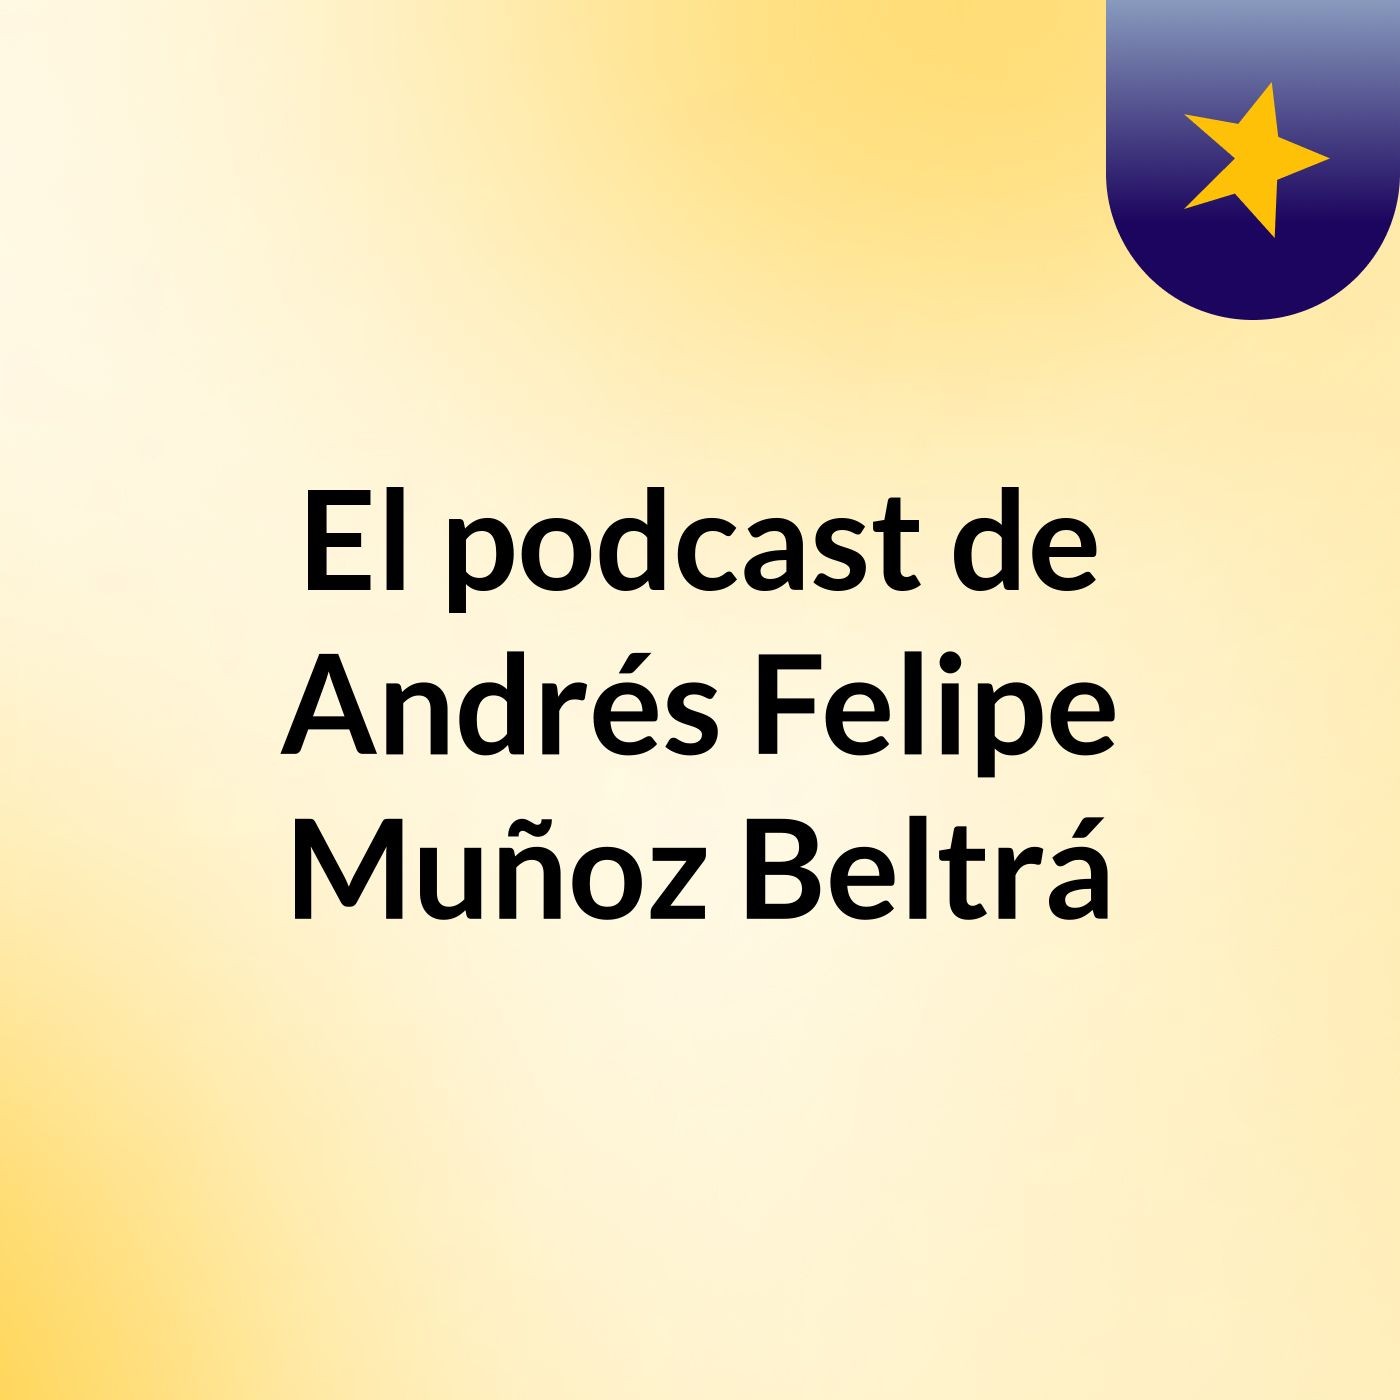 El podcast de Andrés Felipe Muñoz Beltrá